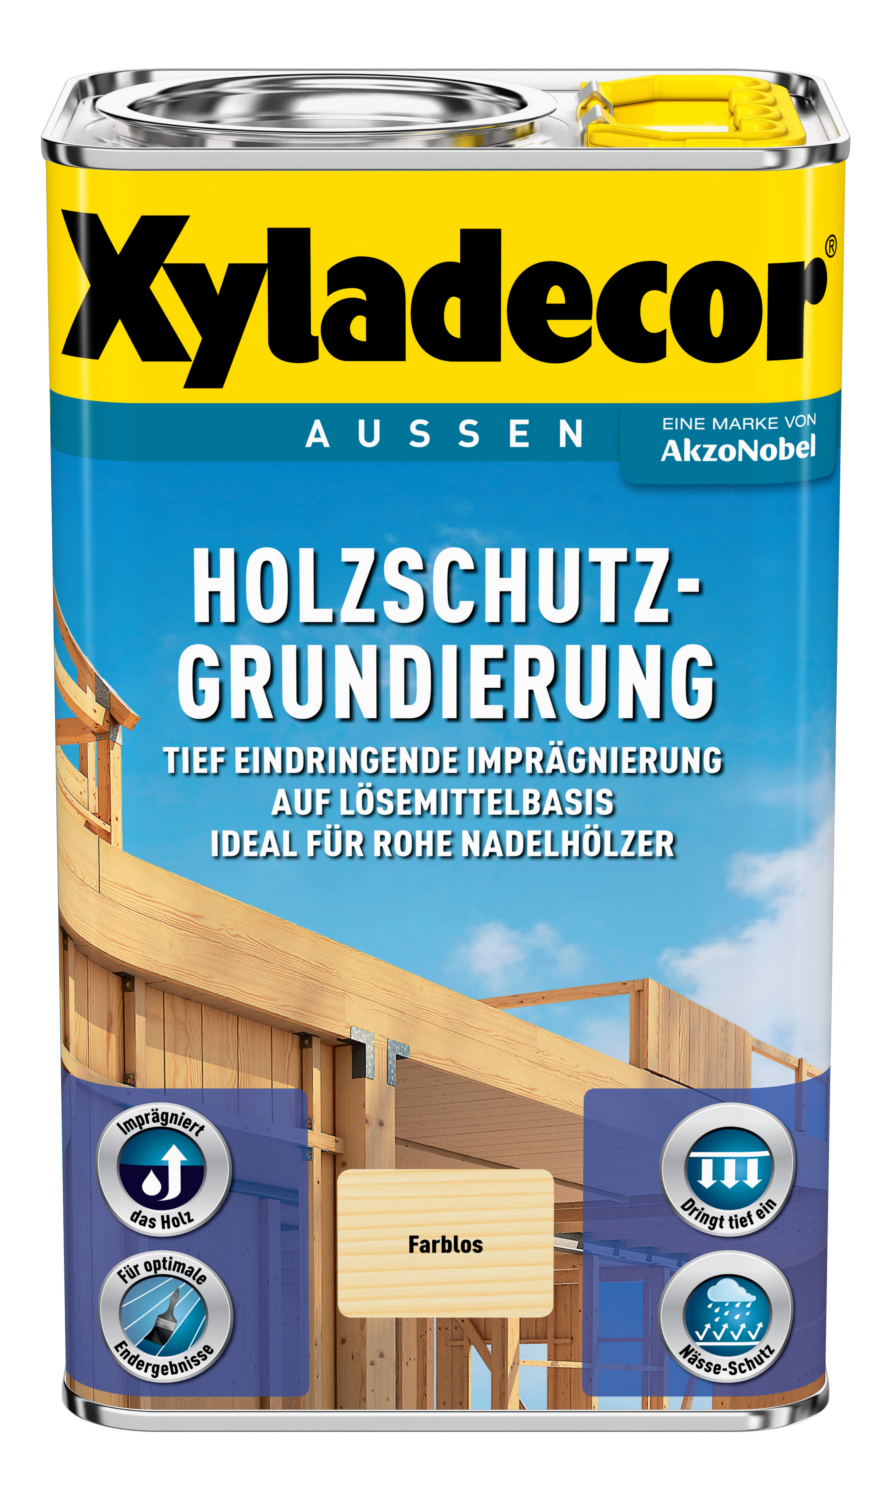 Xyladecor Holzschutz-Grundierung Lösemittelbasis 5 L